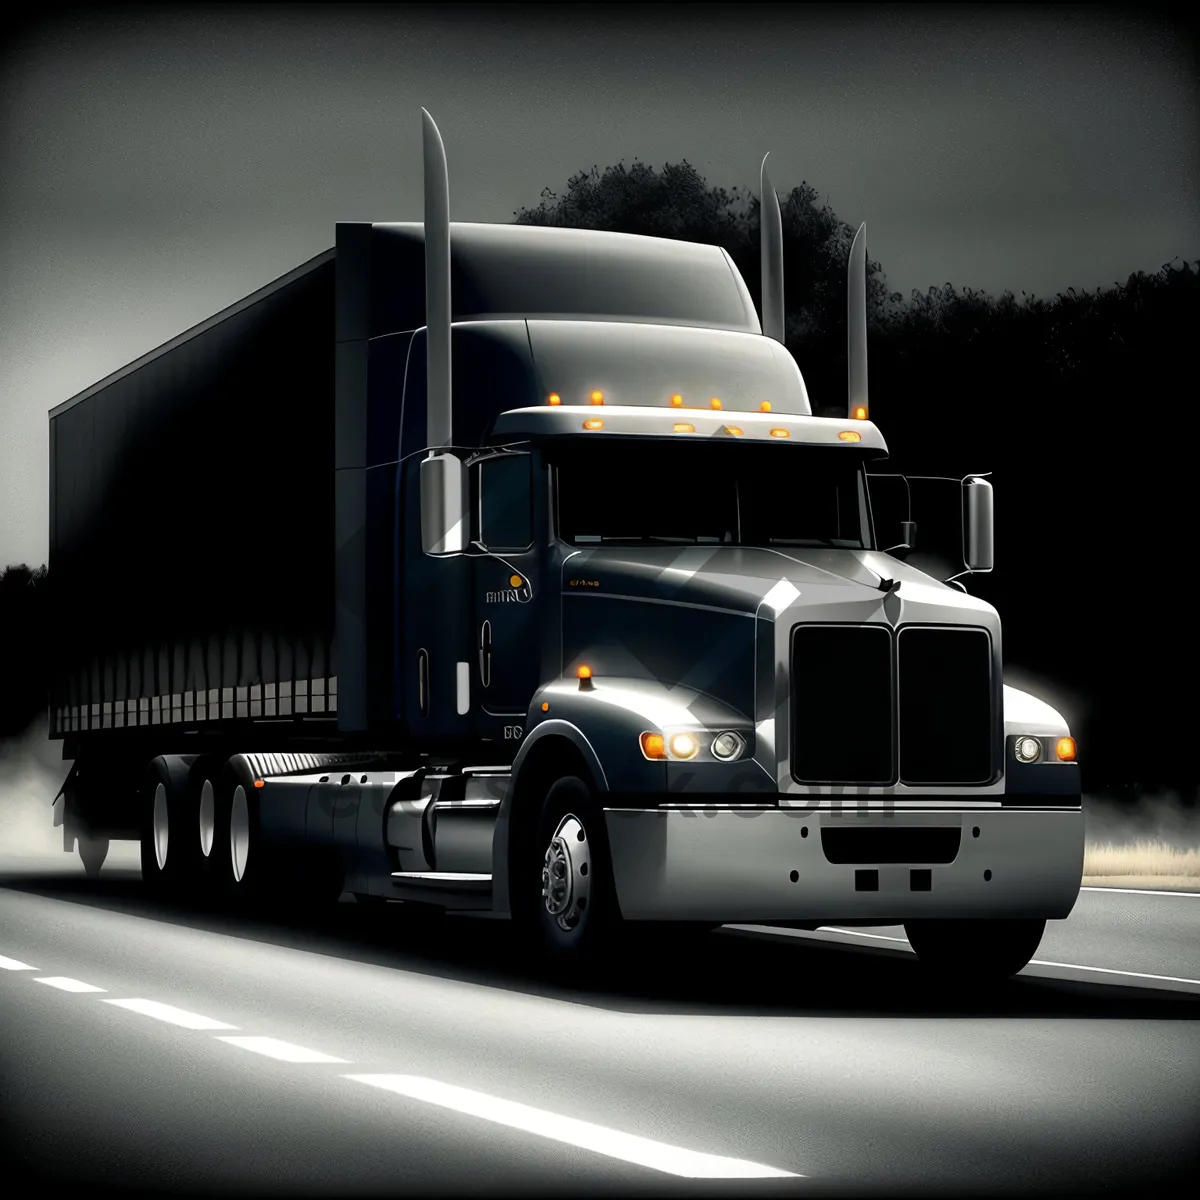 Picture of Highway Hauler: Speeding Trailer Truck for Efficient Cargo Transportation